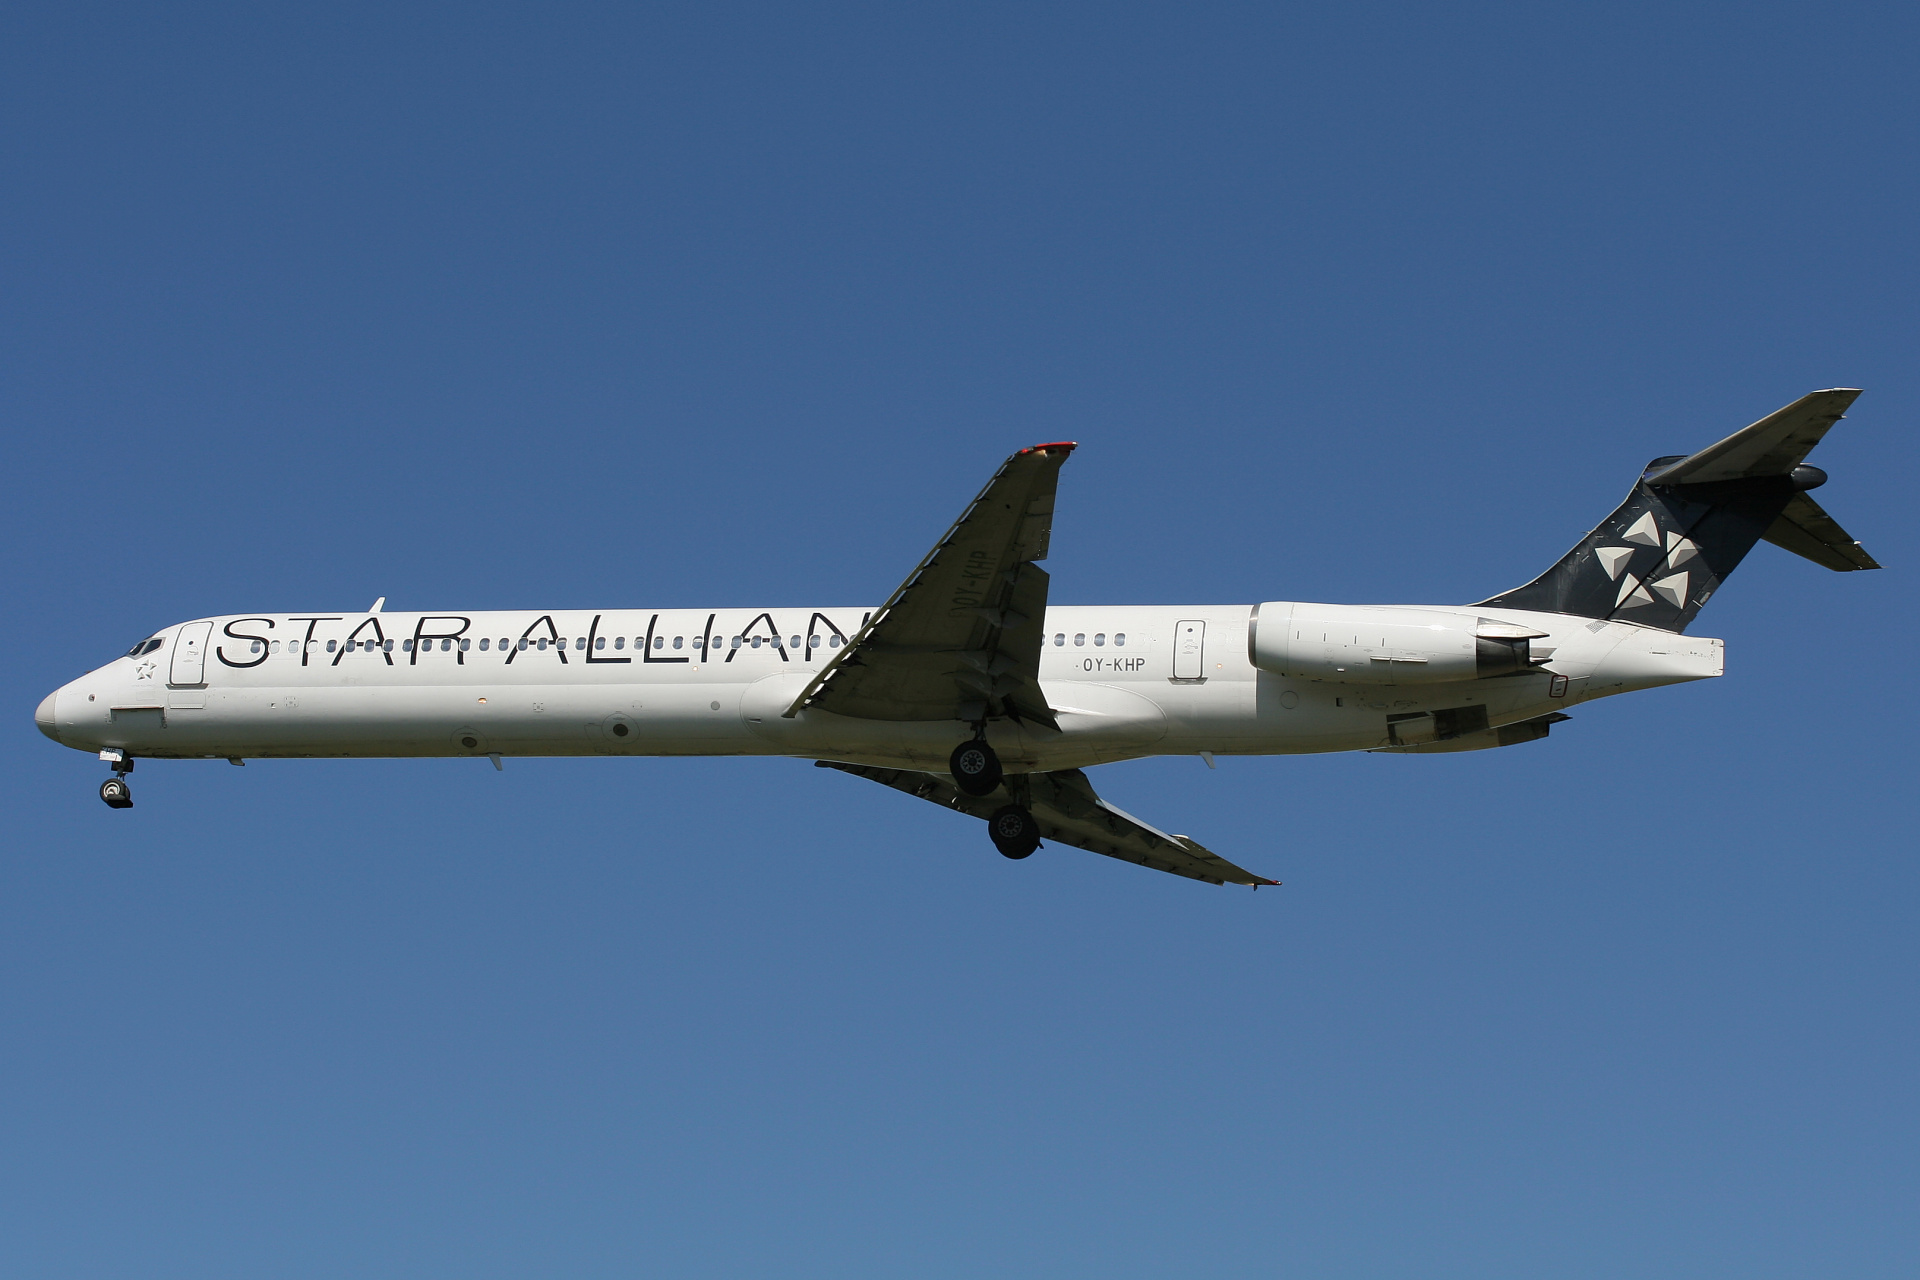 OY-KHP (Star Alliance livery) (Aircraft » EPWA Spotting » McDonnell Douglas MD-82 » SAS Scandinavian Airlines)